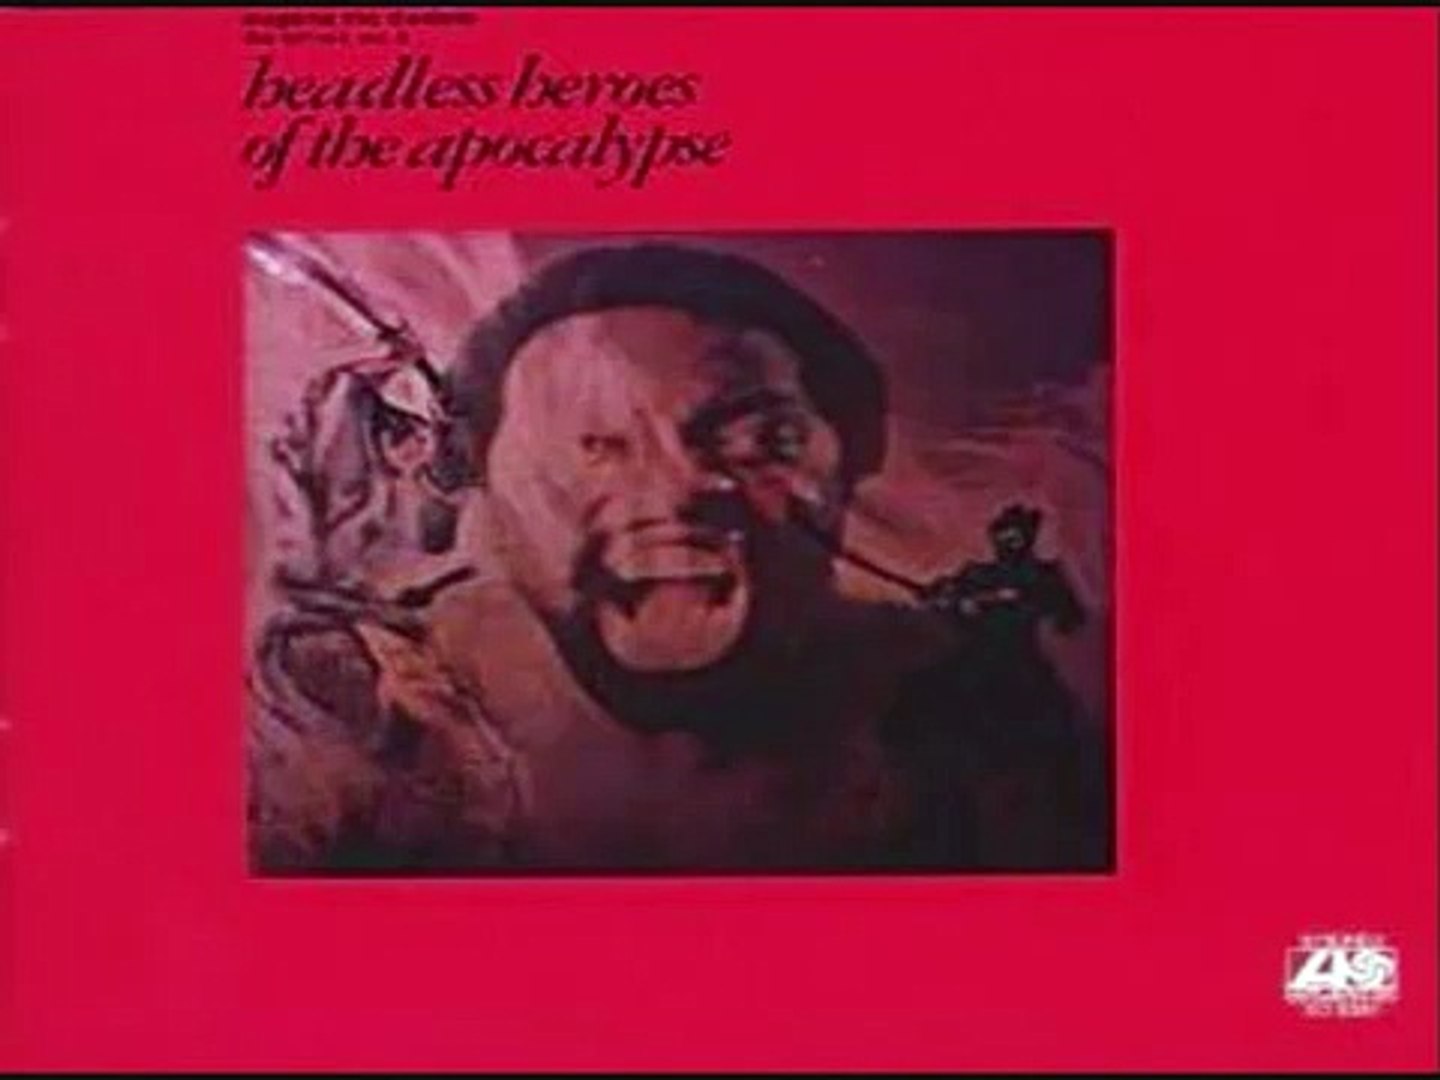 Eugene McDaniels - Headless Heroes Of The Apocalypse LP 1971